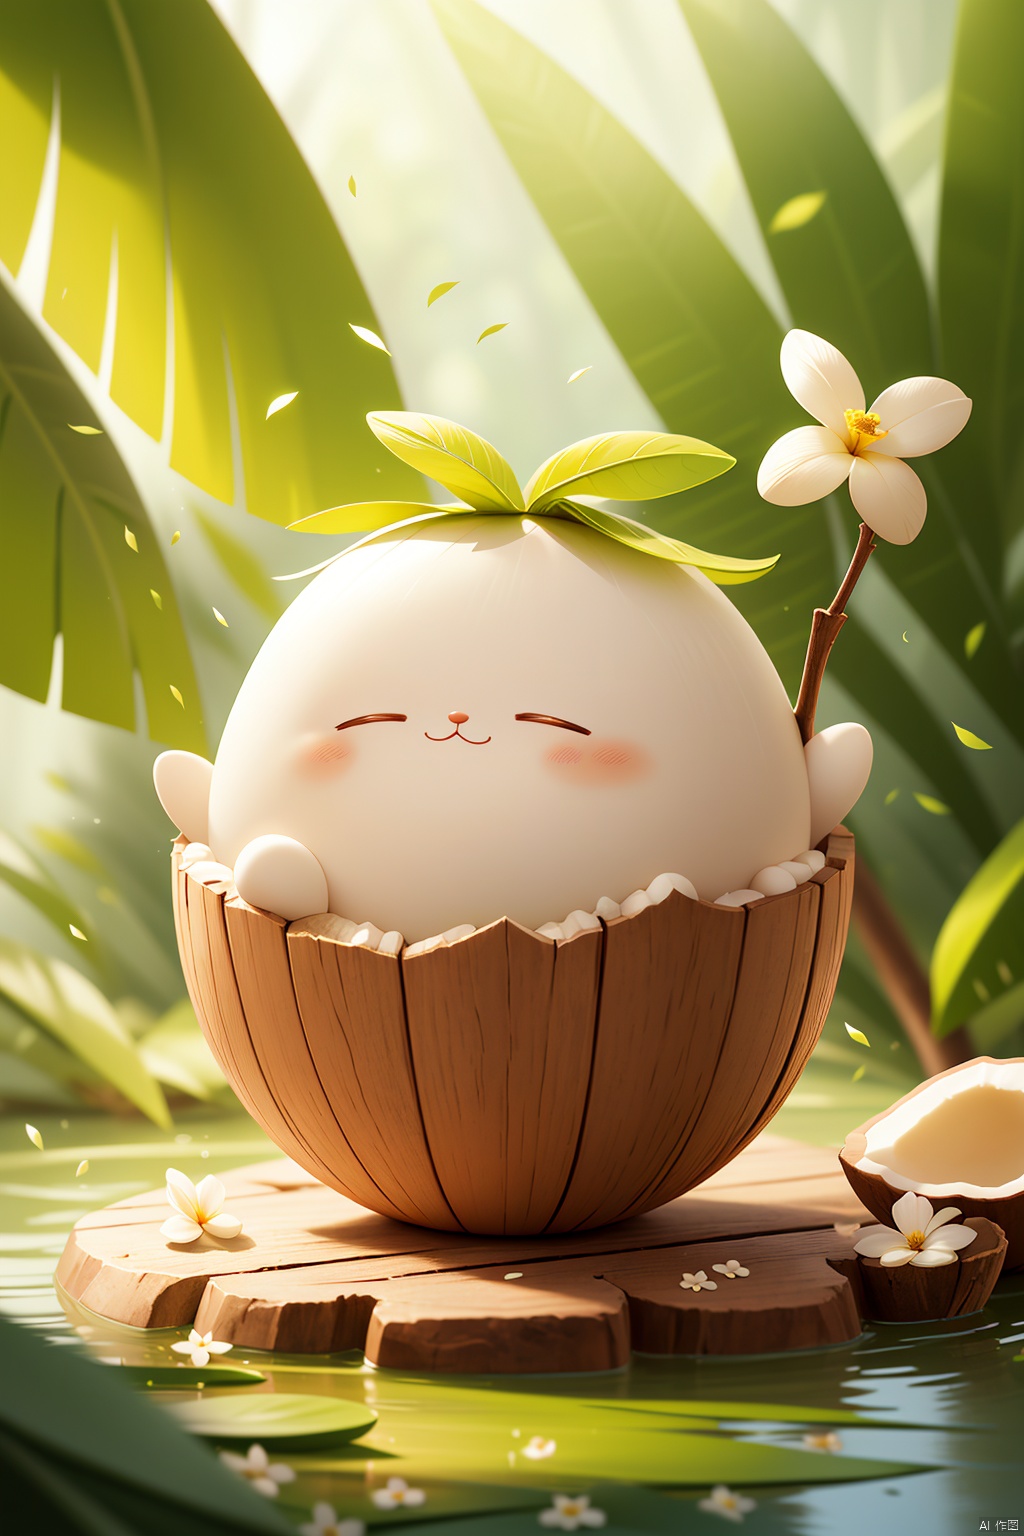 （Red hat：1.2）coconut,Coconut blind box,blush,closed eyes,dandelion,depth of field,flower,grass,hat,leaf,solo,sunlight,white flower